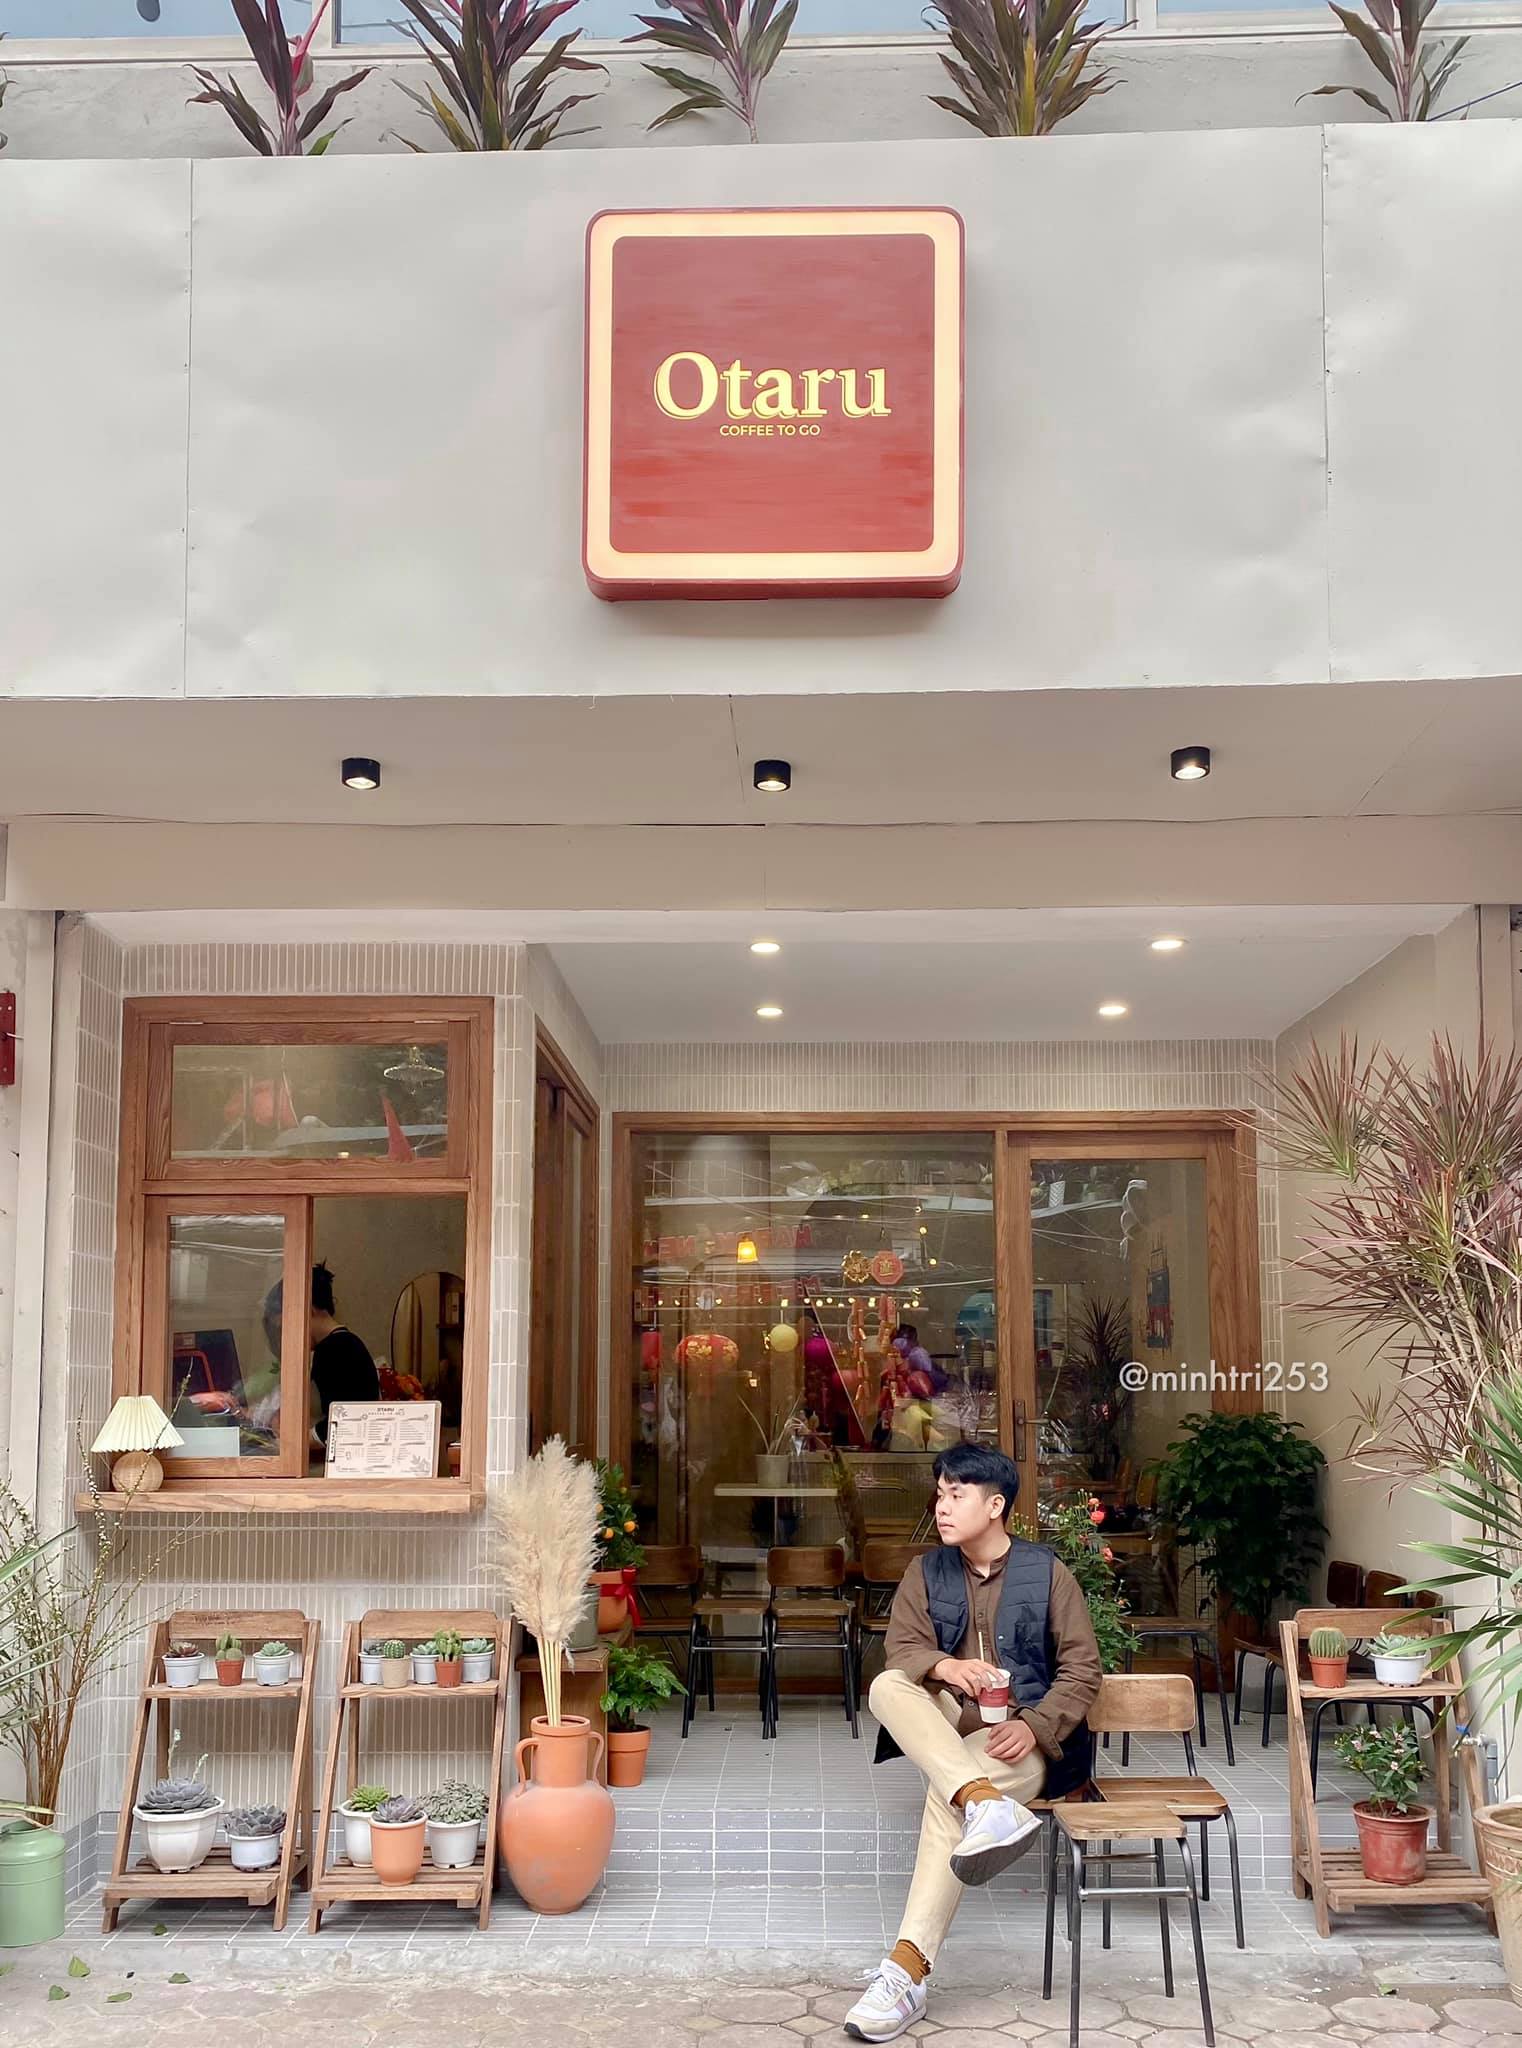 Otaru - coffee so 1 ton that tung